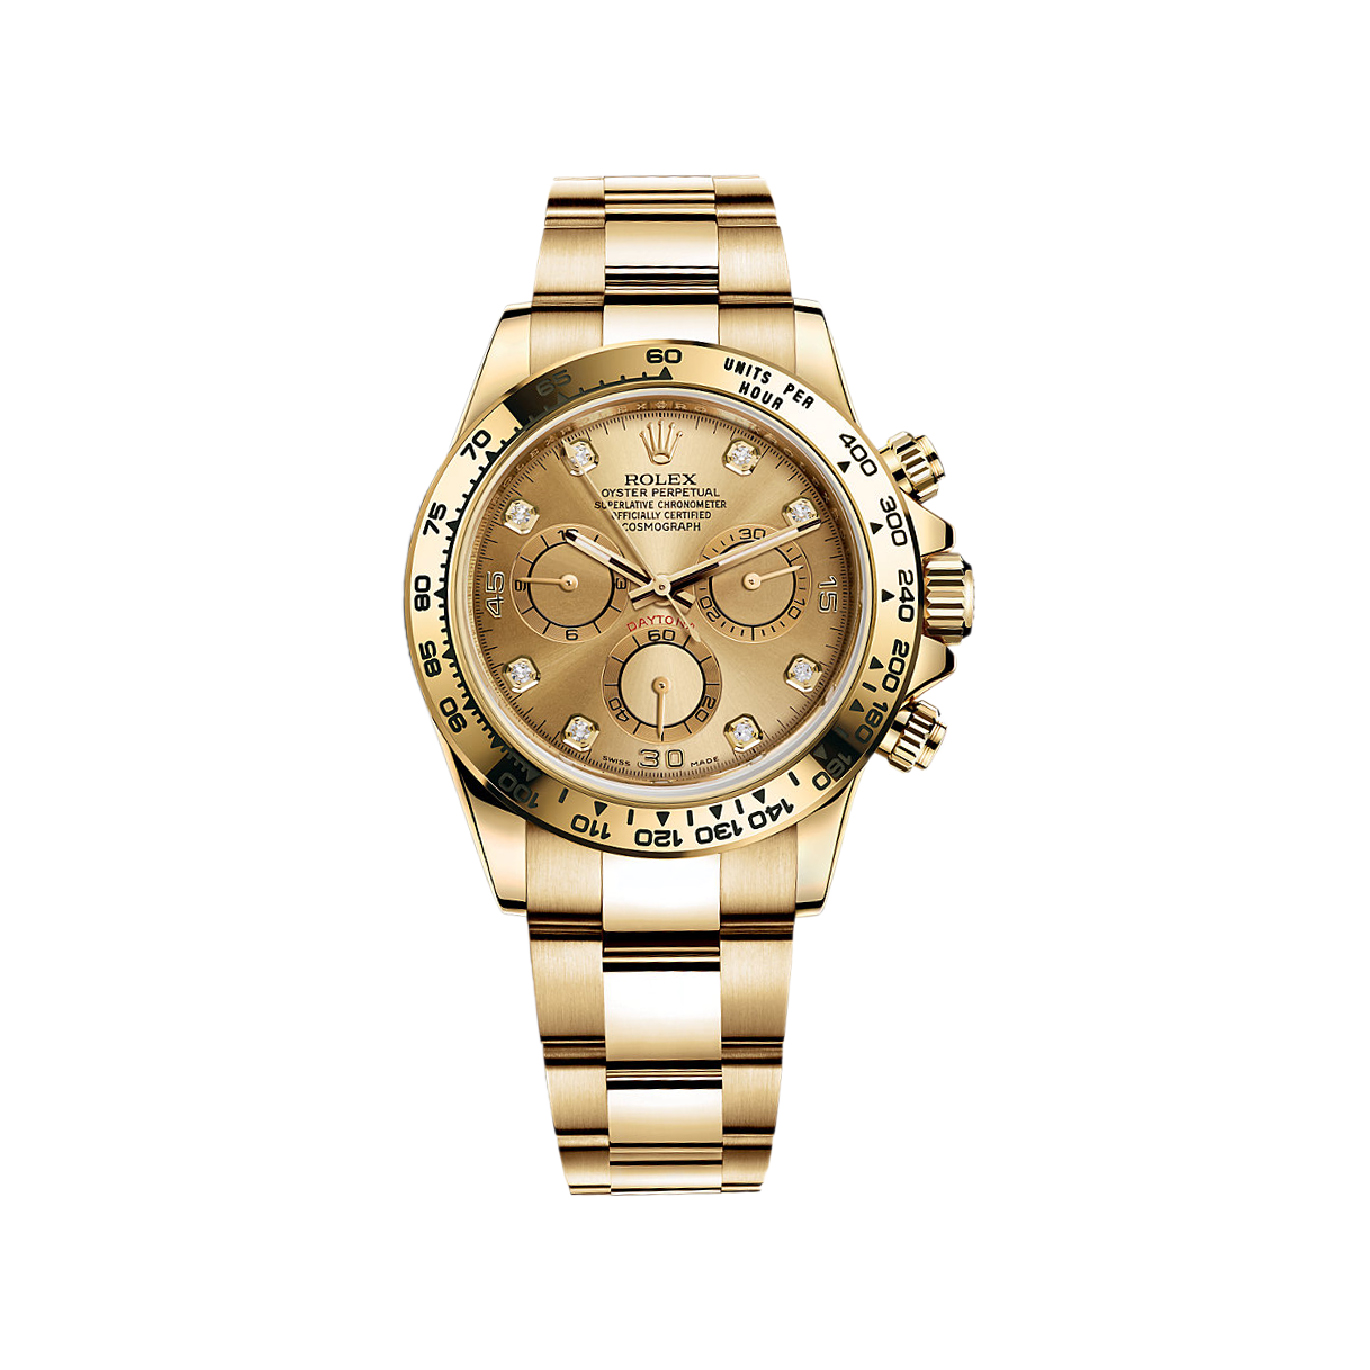 Cosmograph Daytona 116528 Gold Watch (Champagne Set with Diamonds)